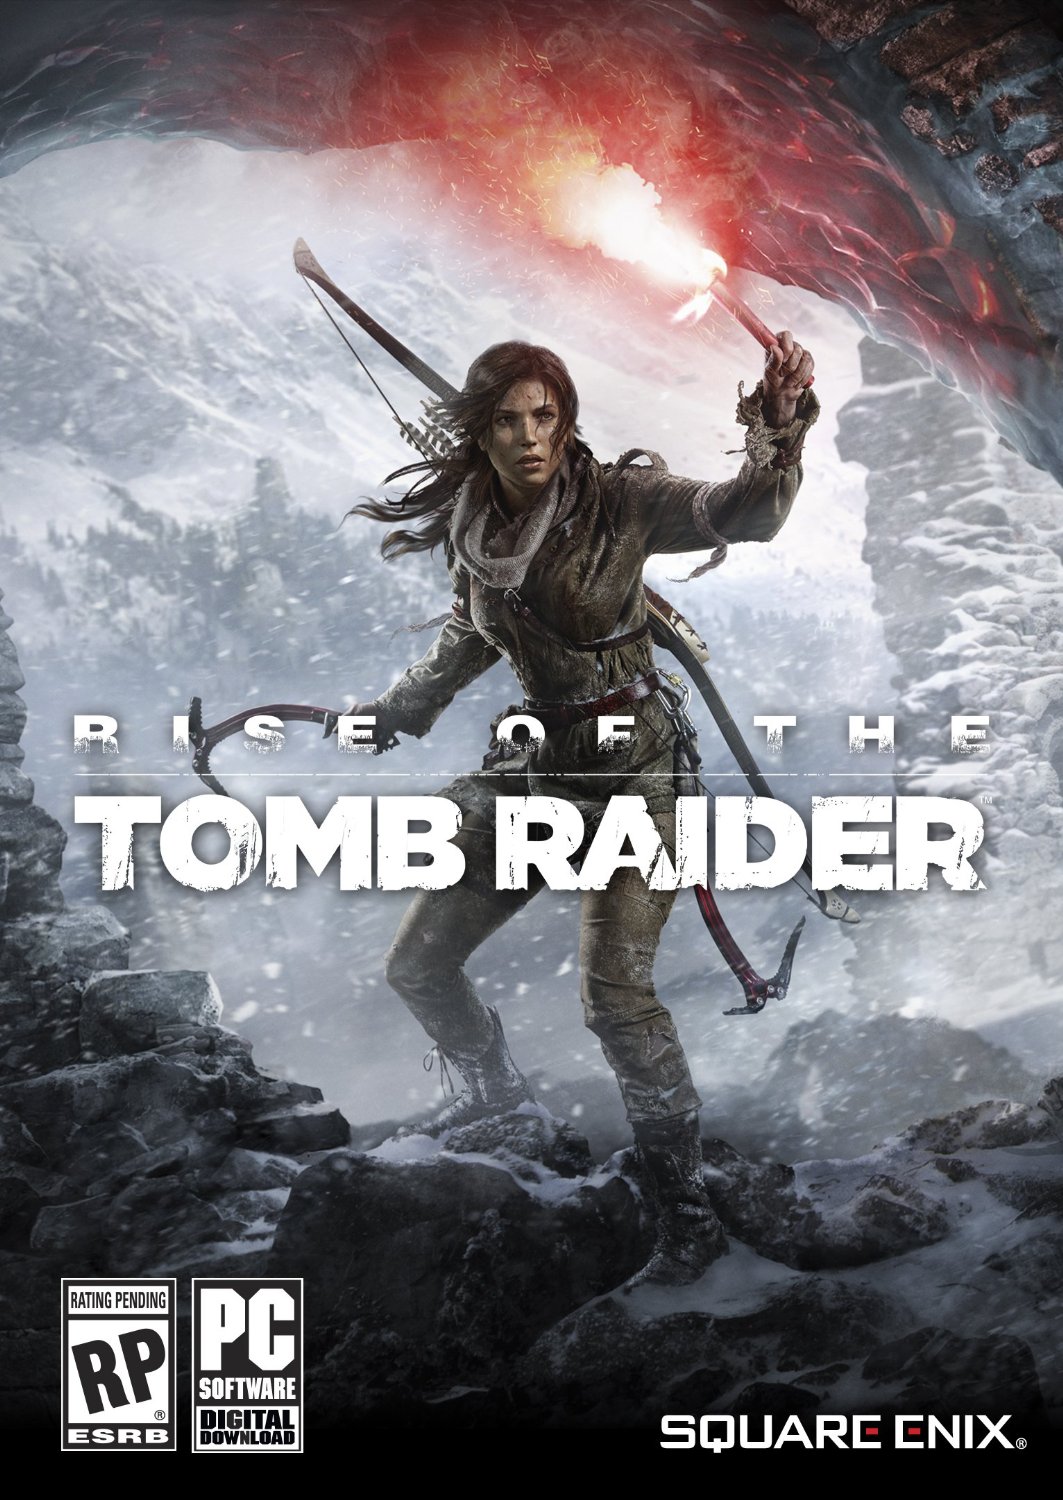 Tomb raider download pc free